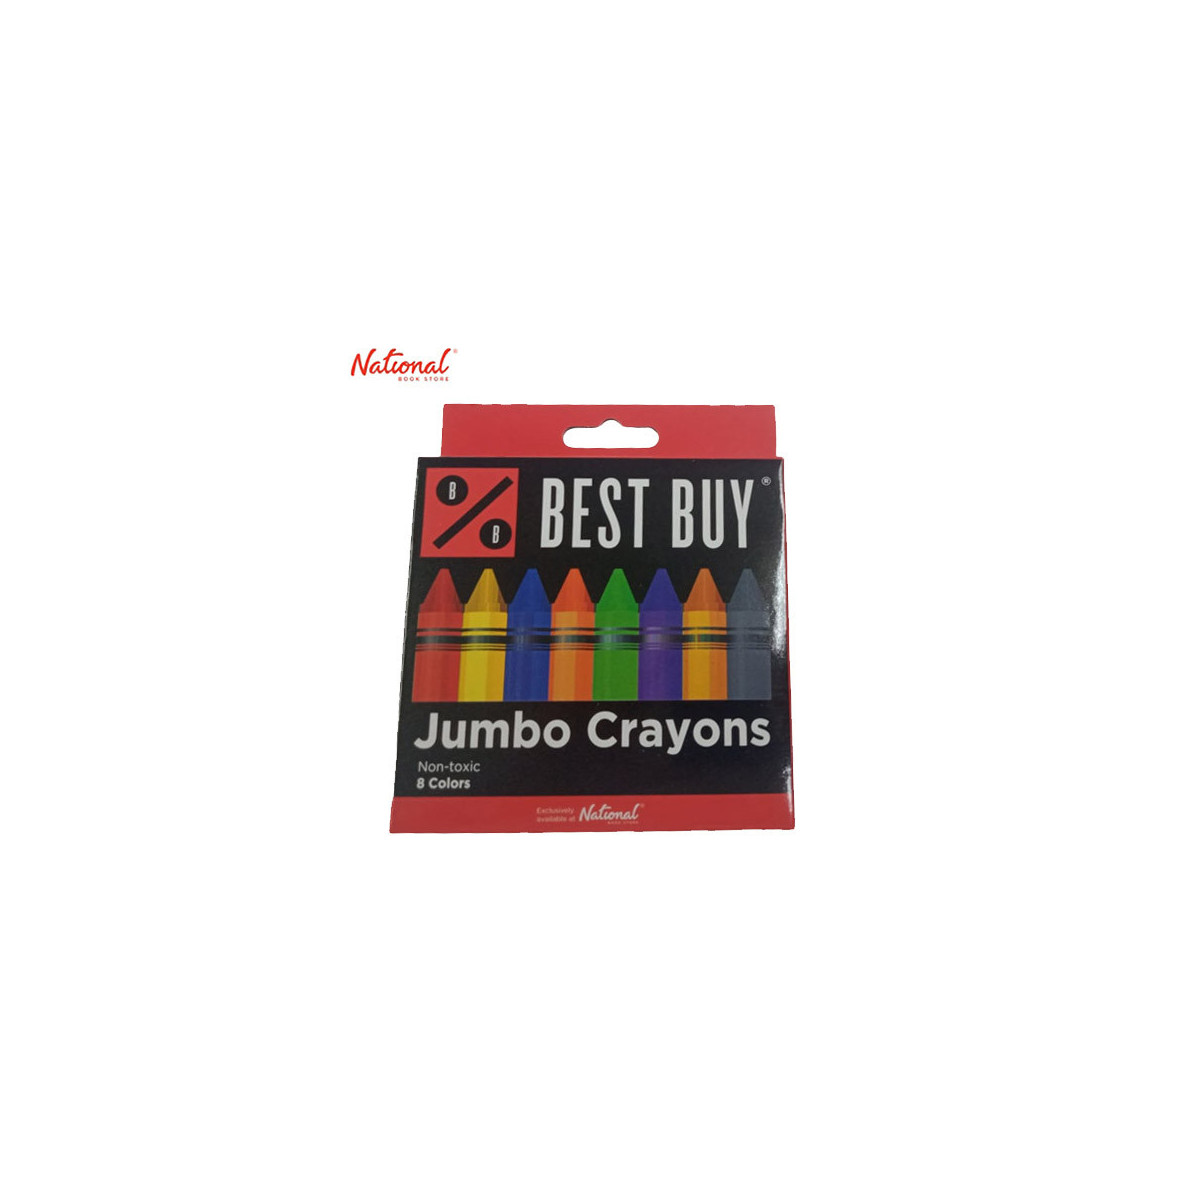 Best Buy Jumbo Crayons 8 colors